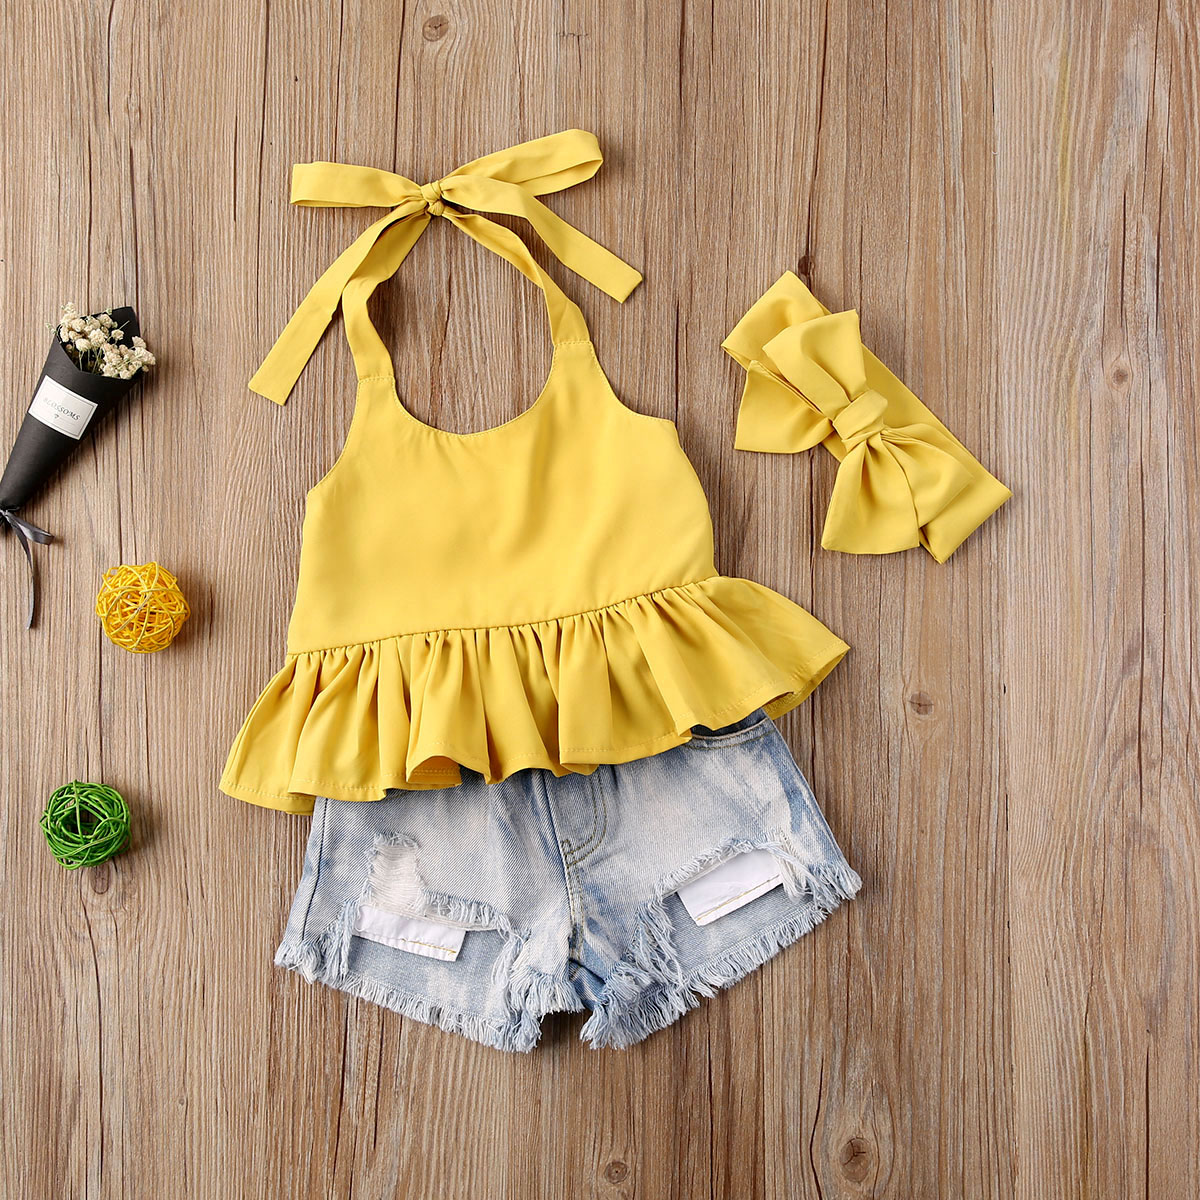 2020 Baby Summer Clothing Infant Kids 1-6T Baby Girls Shirt Dress Top Denim Ripped Shorts 2Pcs Set